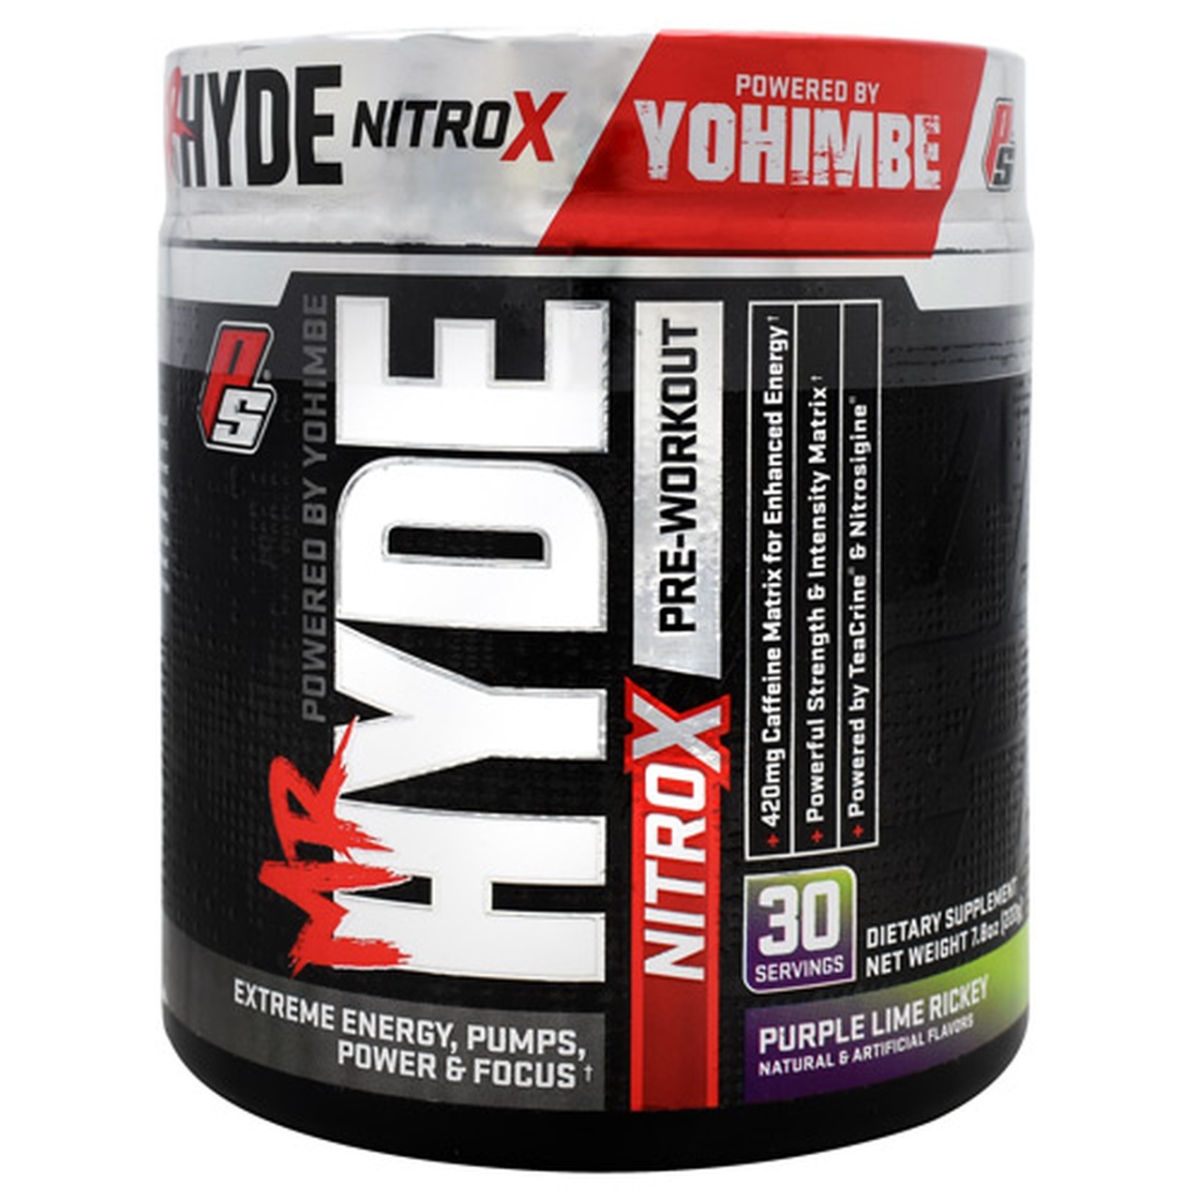 Pro Supps 3430421 Mr. Hyde Nitrox Pre-workout, Purple Lime Rickey - 30 Servings